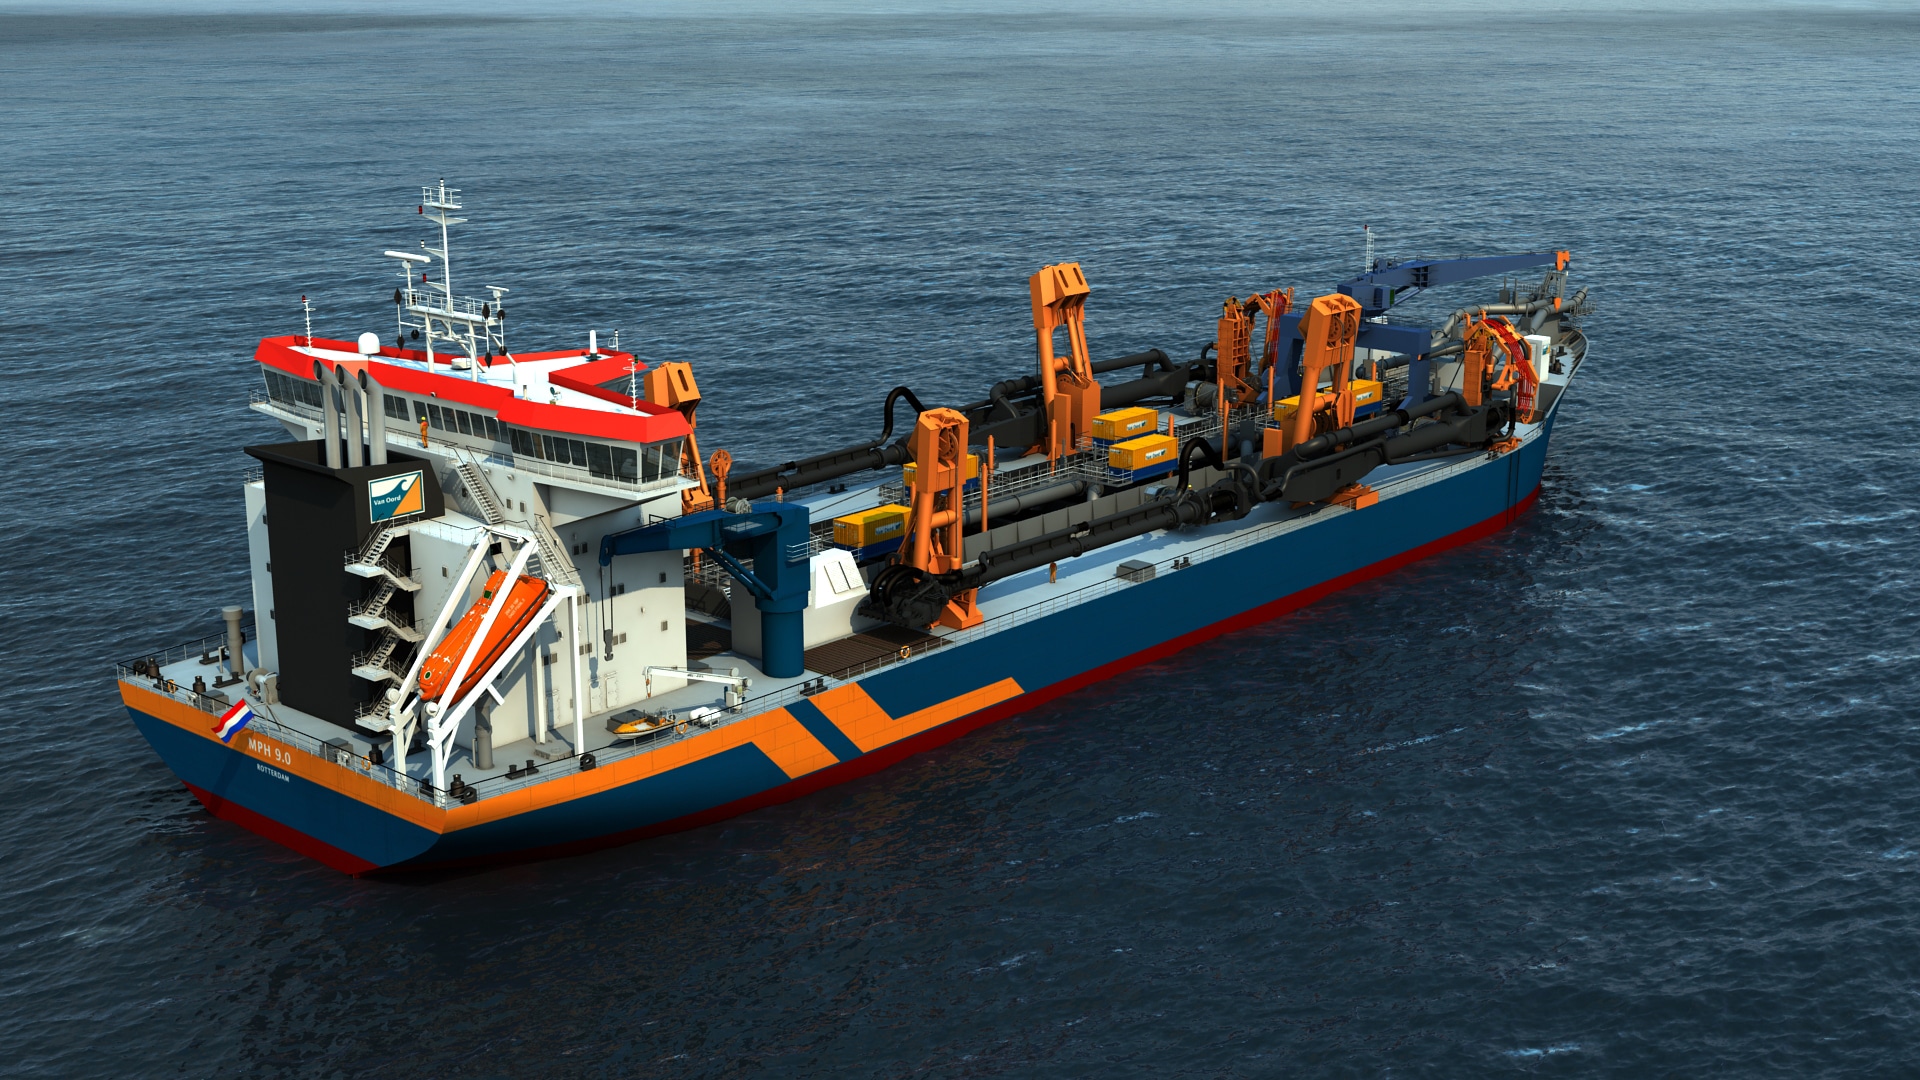 vehicles, offshore support vessel, ship, van oord vox amalia